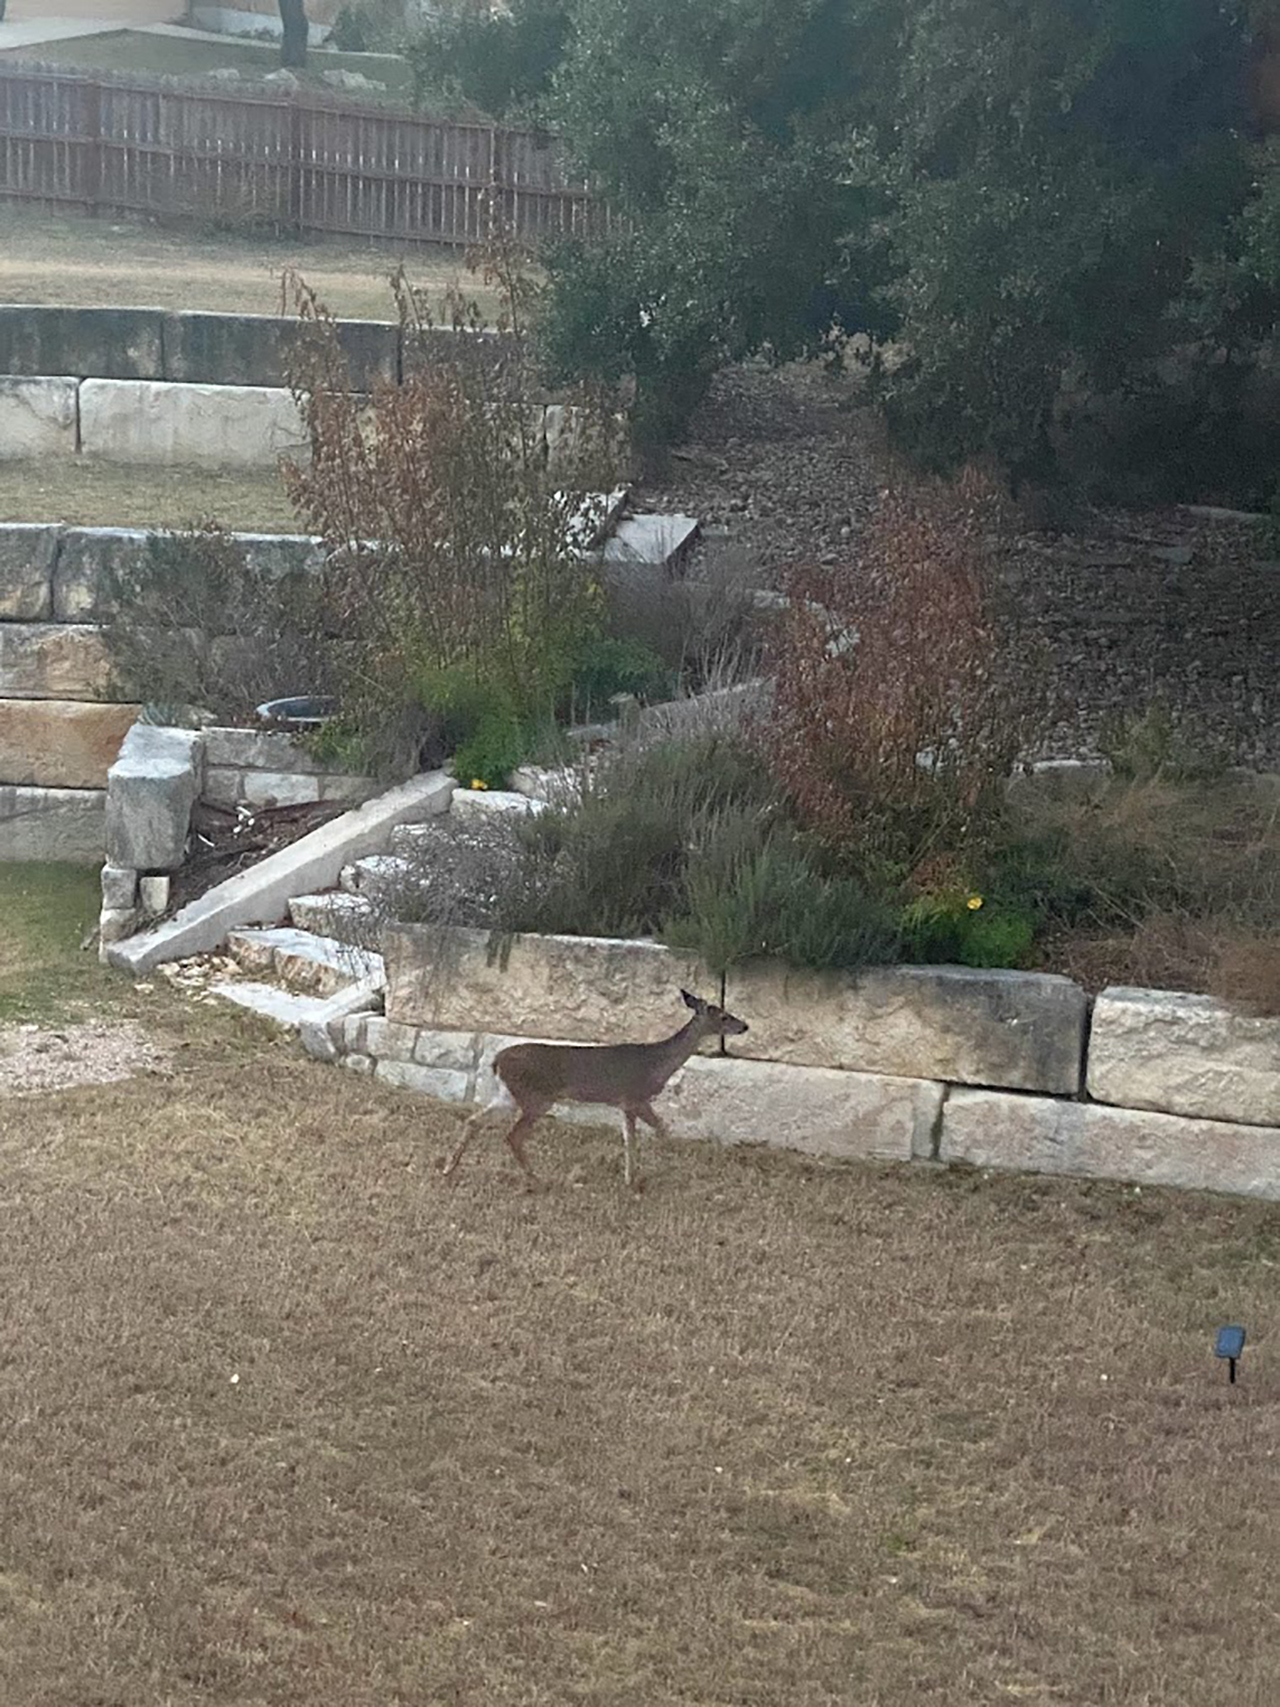 Deer in Simple Jones backyard for nightly feeding ritual